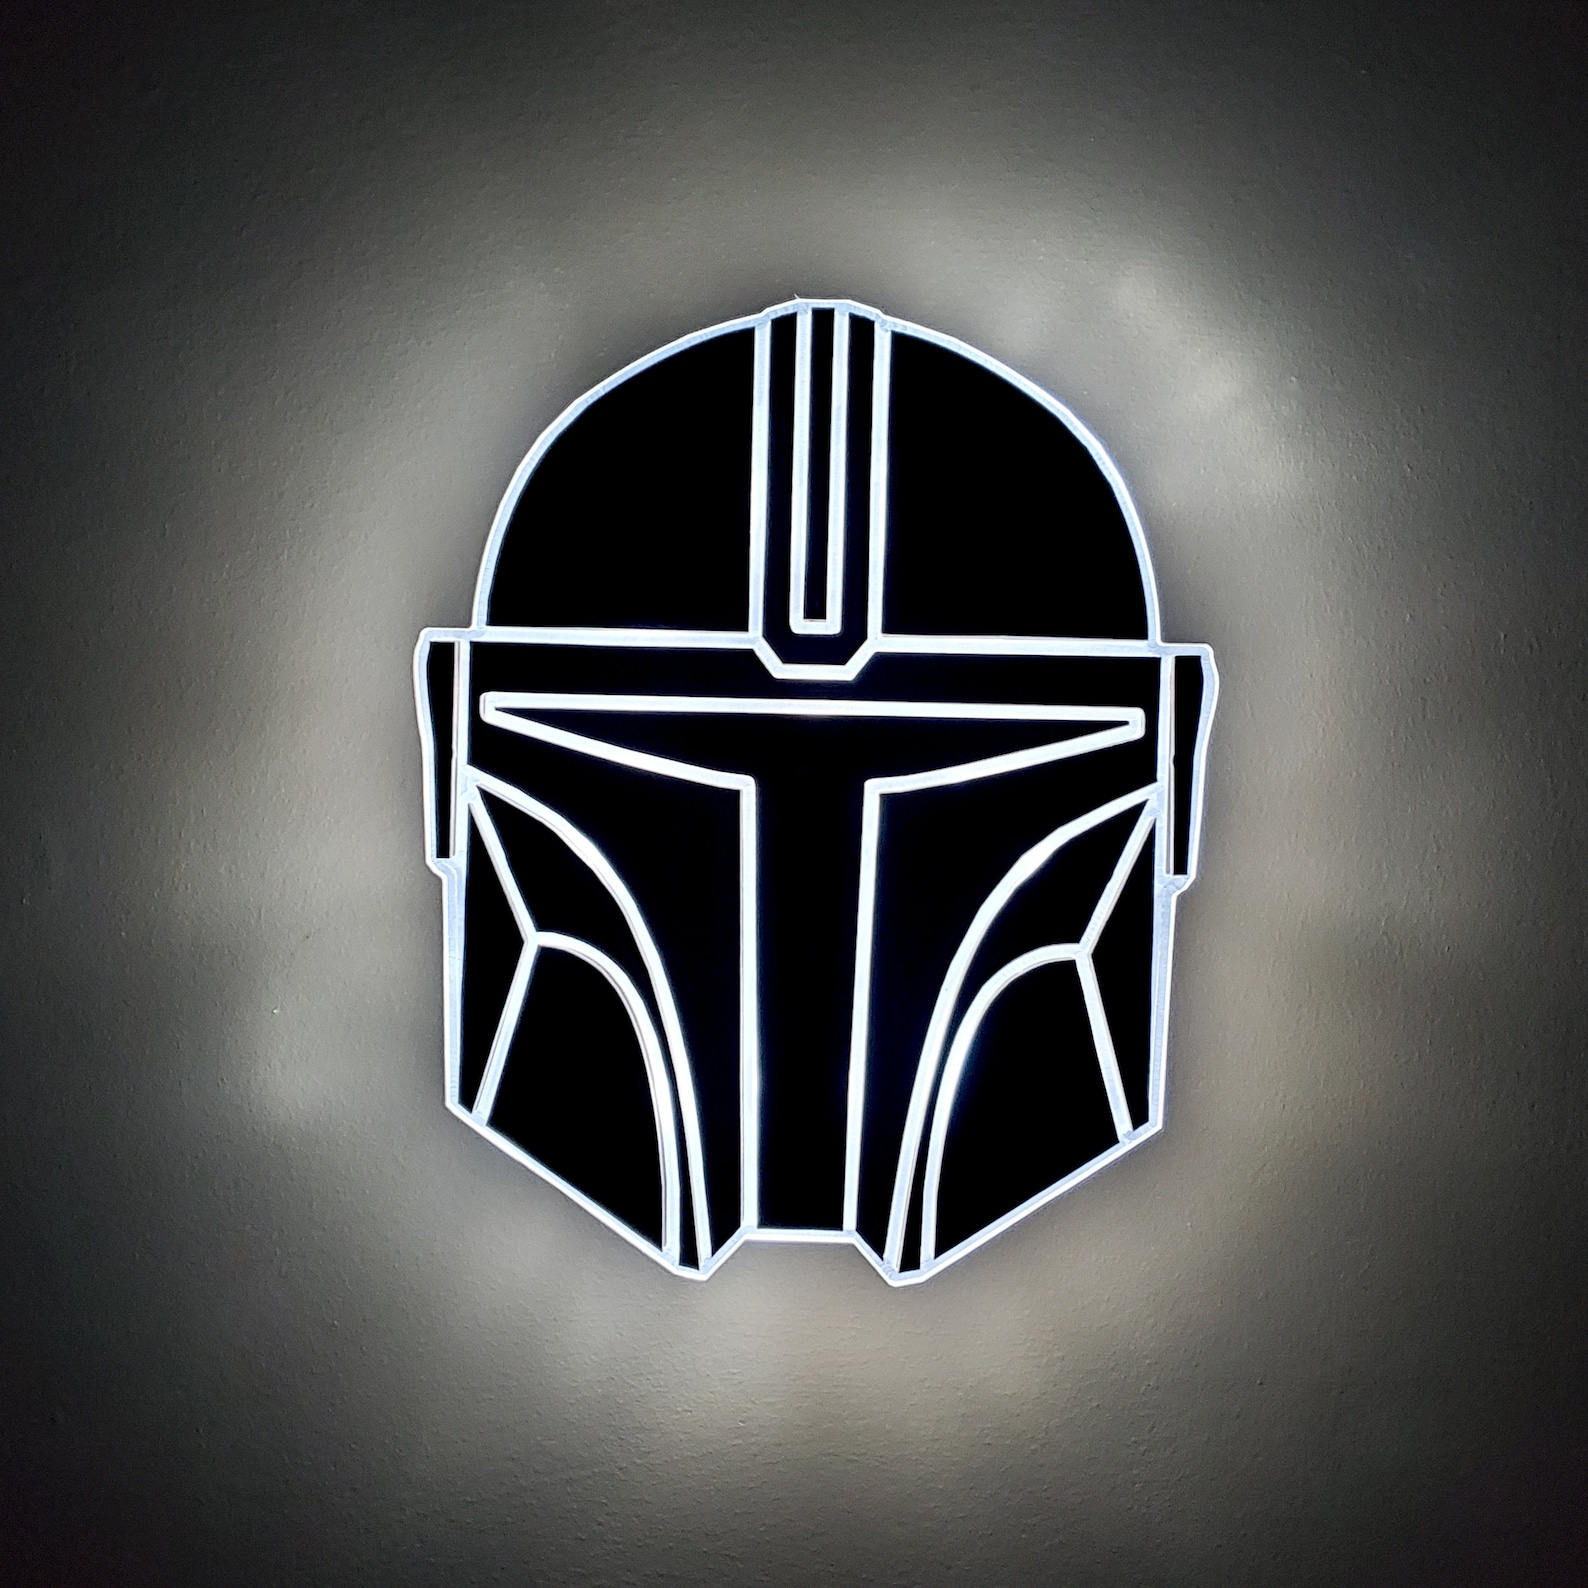 TM Mando's (Din Djarin's) Helmet Neon LED Light Wall Decor Sign 3